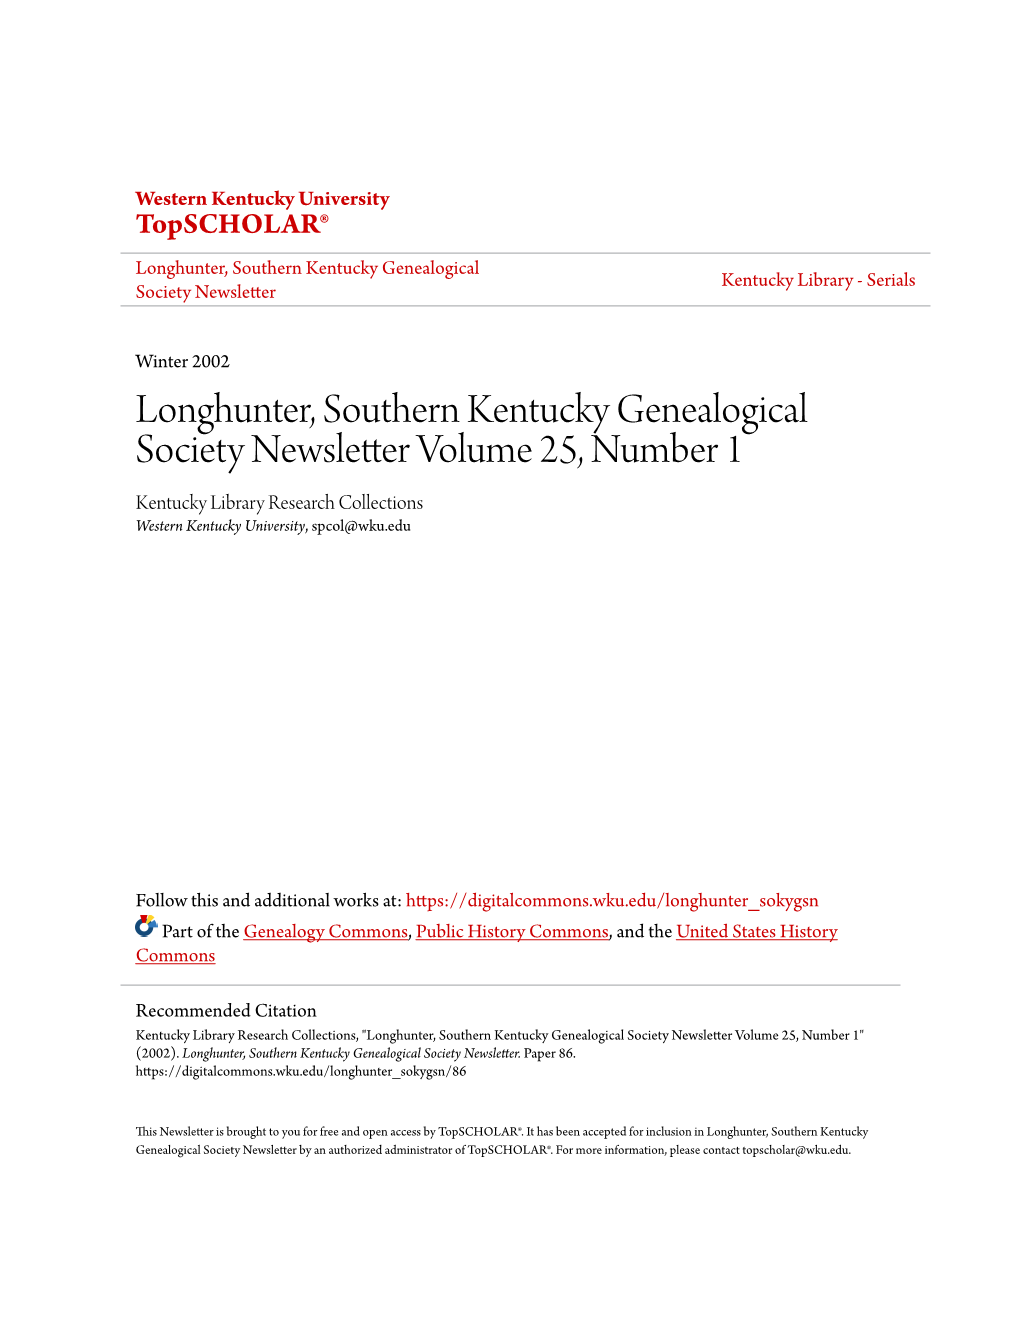 Longhunter, Southern Kentucky Genealogical Society Newsletter Volume 25, Number 1 Kentucky Library Research Collections Western Kentucky University, Spcol@Wku.Edu